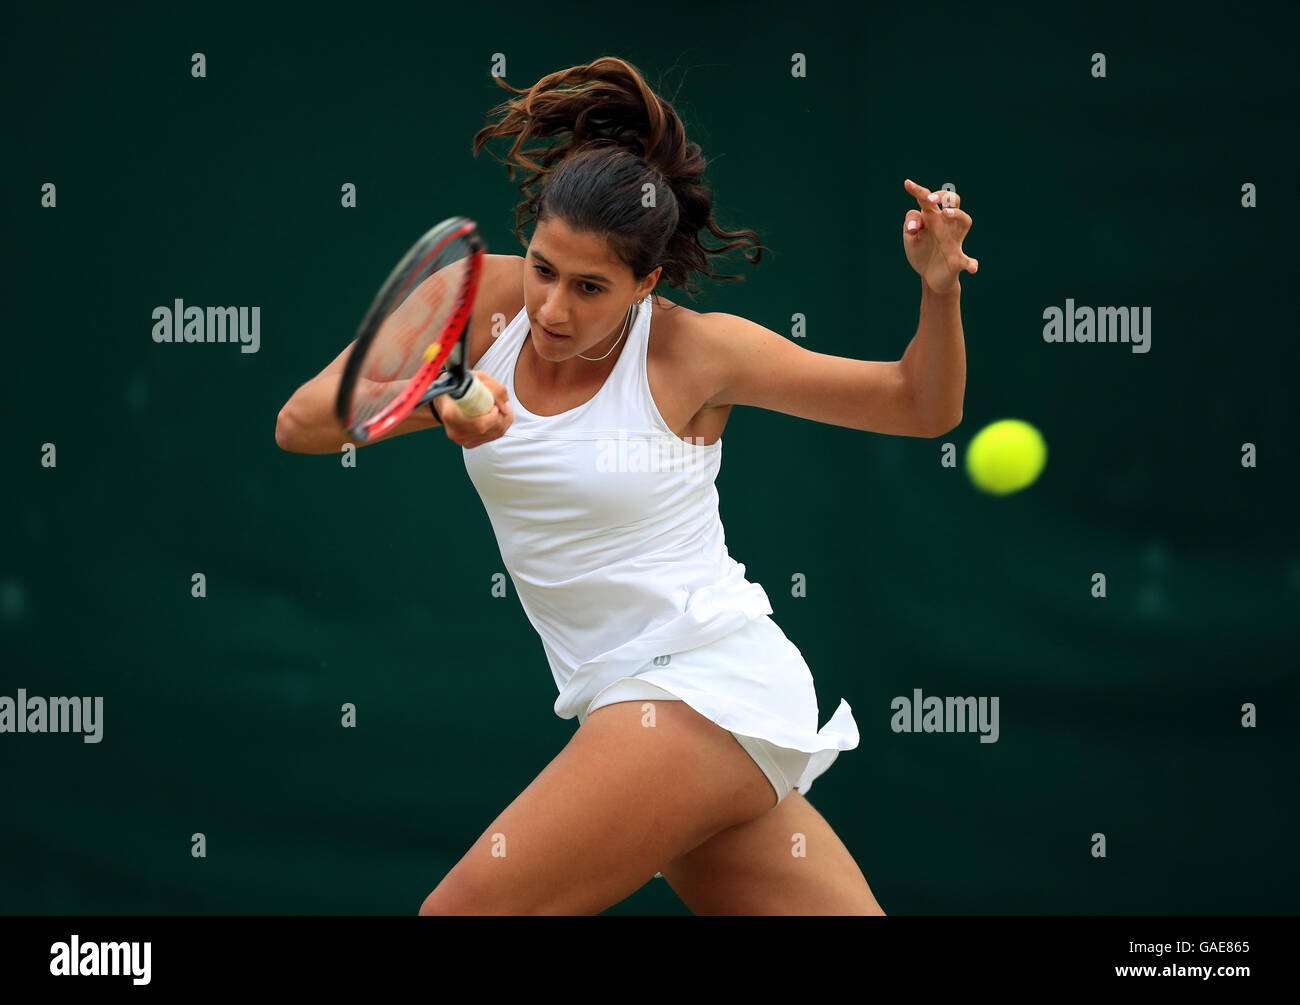 Jaimee Fourlis in Aktion in der Girls singles am Tag sieben der Wimbledon Championships bei den All England Lawn Tennis and Croquet Club, Wimbledon. Stockfoto